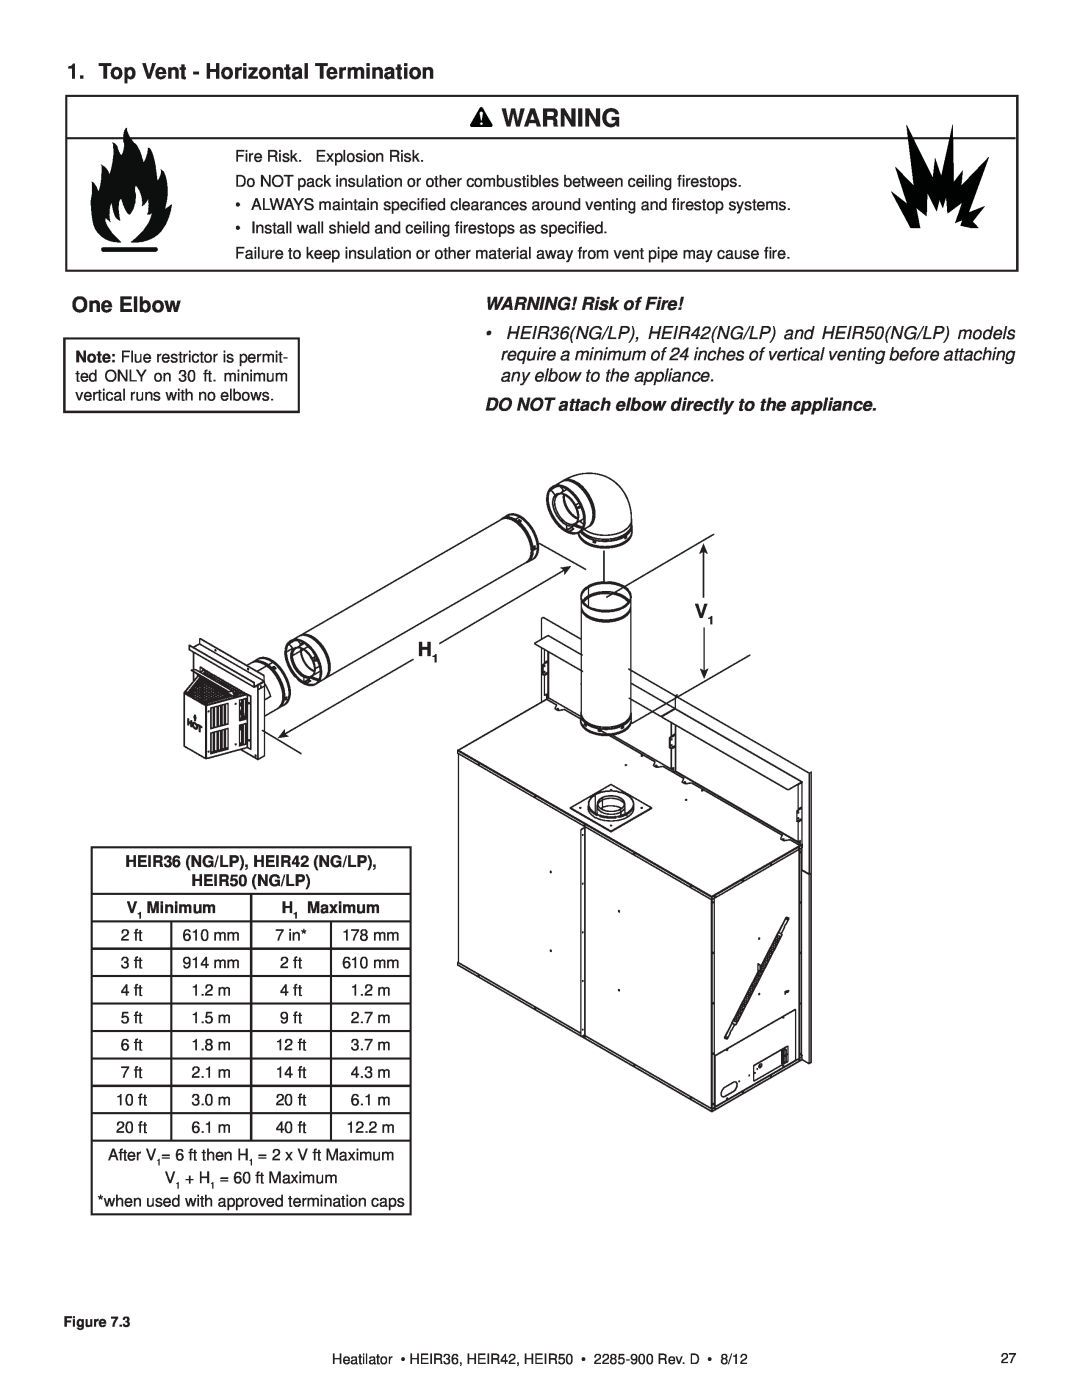 Heatiator HEIR36H, HEIR42H Top Vent - Horizontal Termination, One Elbow, V1 H1, WARNING! Risk of Fire, V1 Minimum, Maximum 